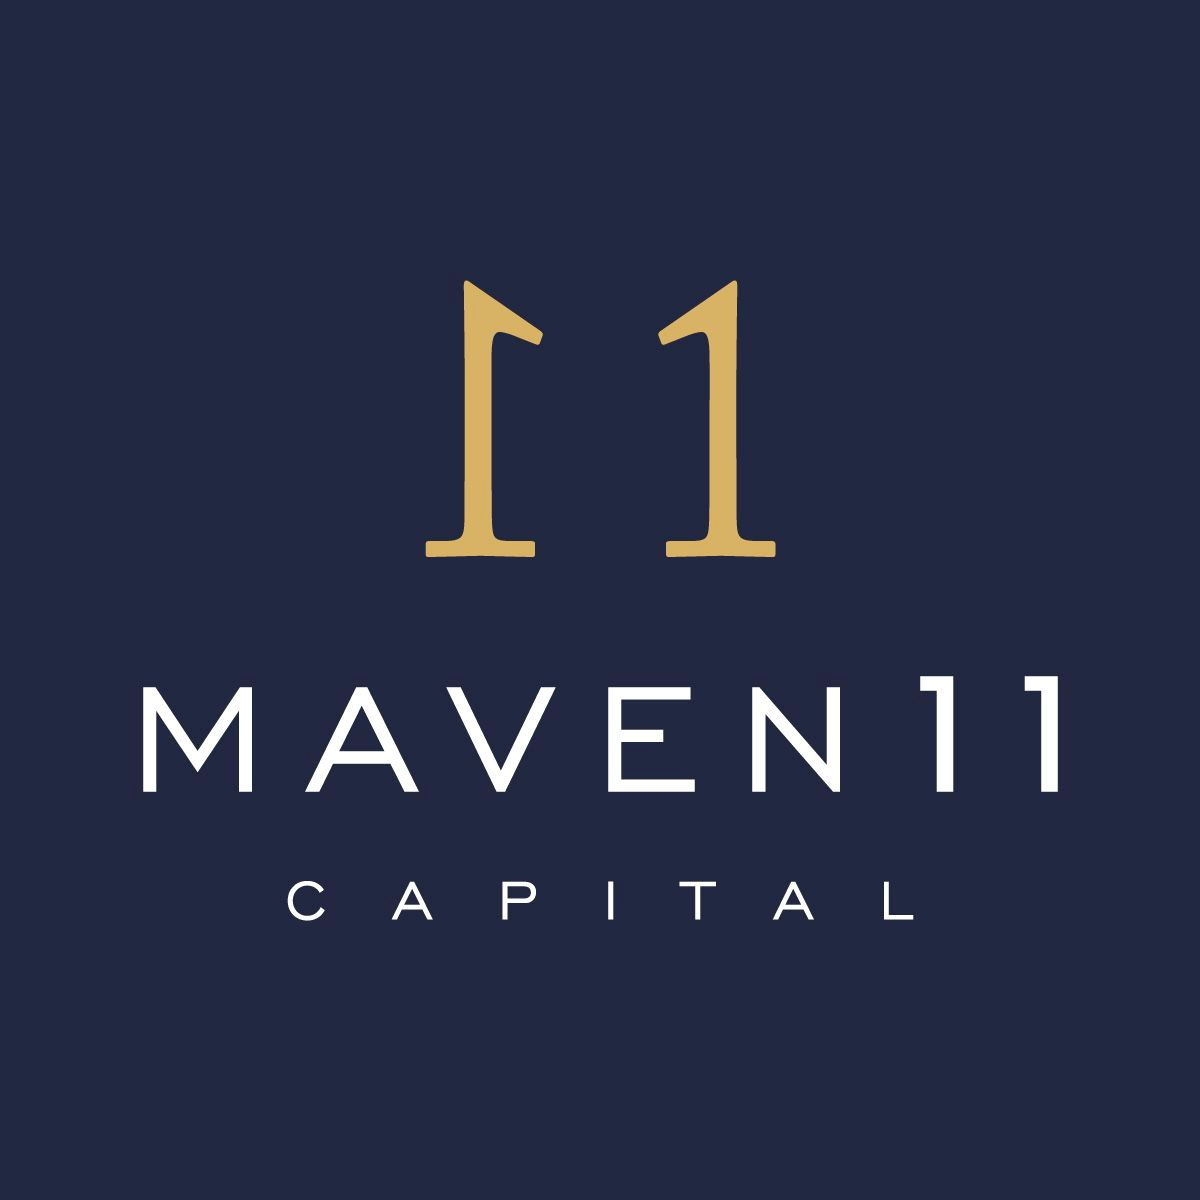 Maven11 logo